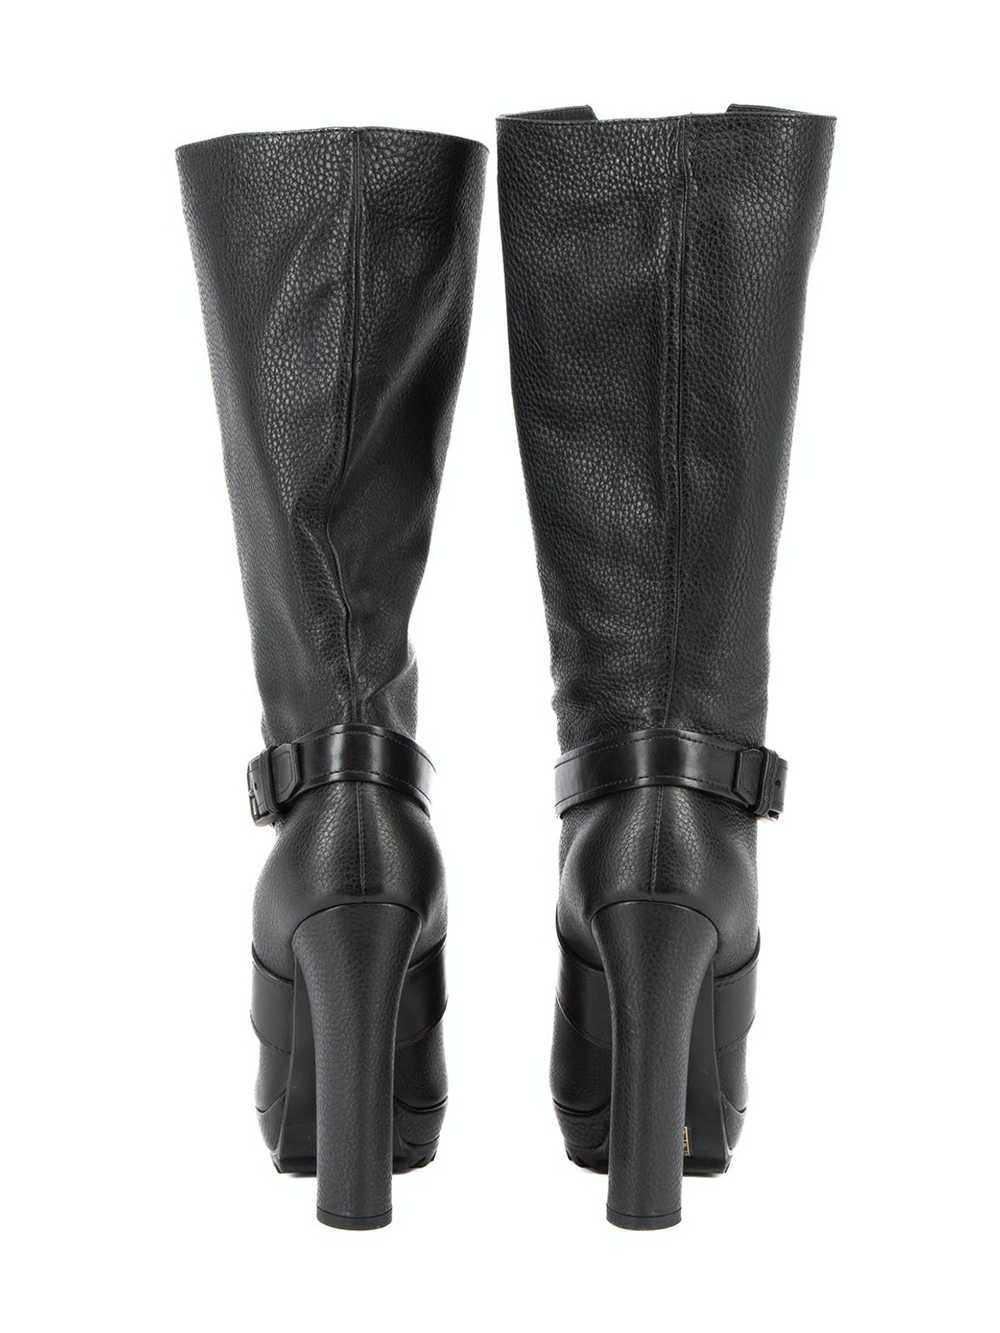 Bottega Veneta Knee High Boots with Buckle Detail - image 4